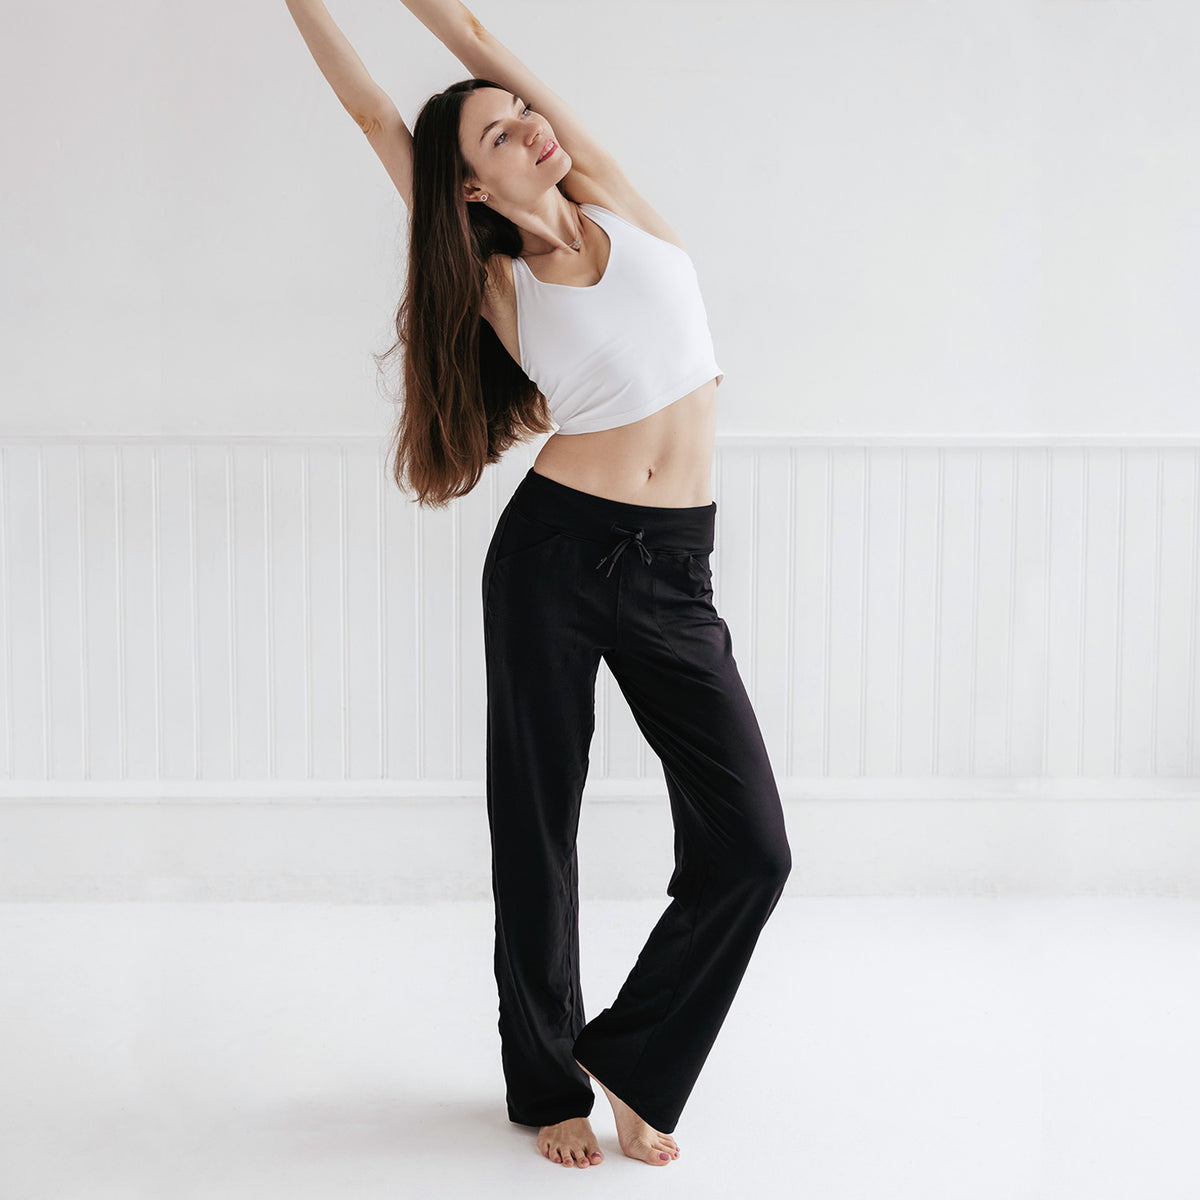 Yogipace,Petite Women's Bootcut Yoga Pants Long  